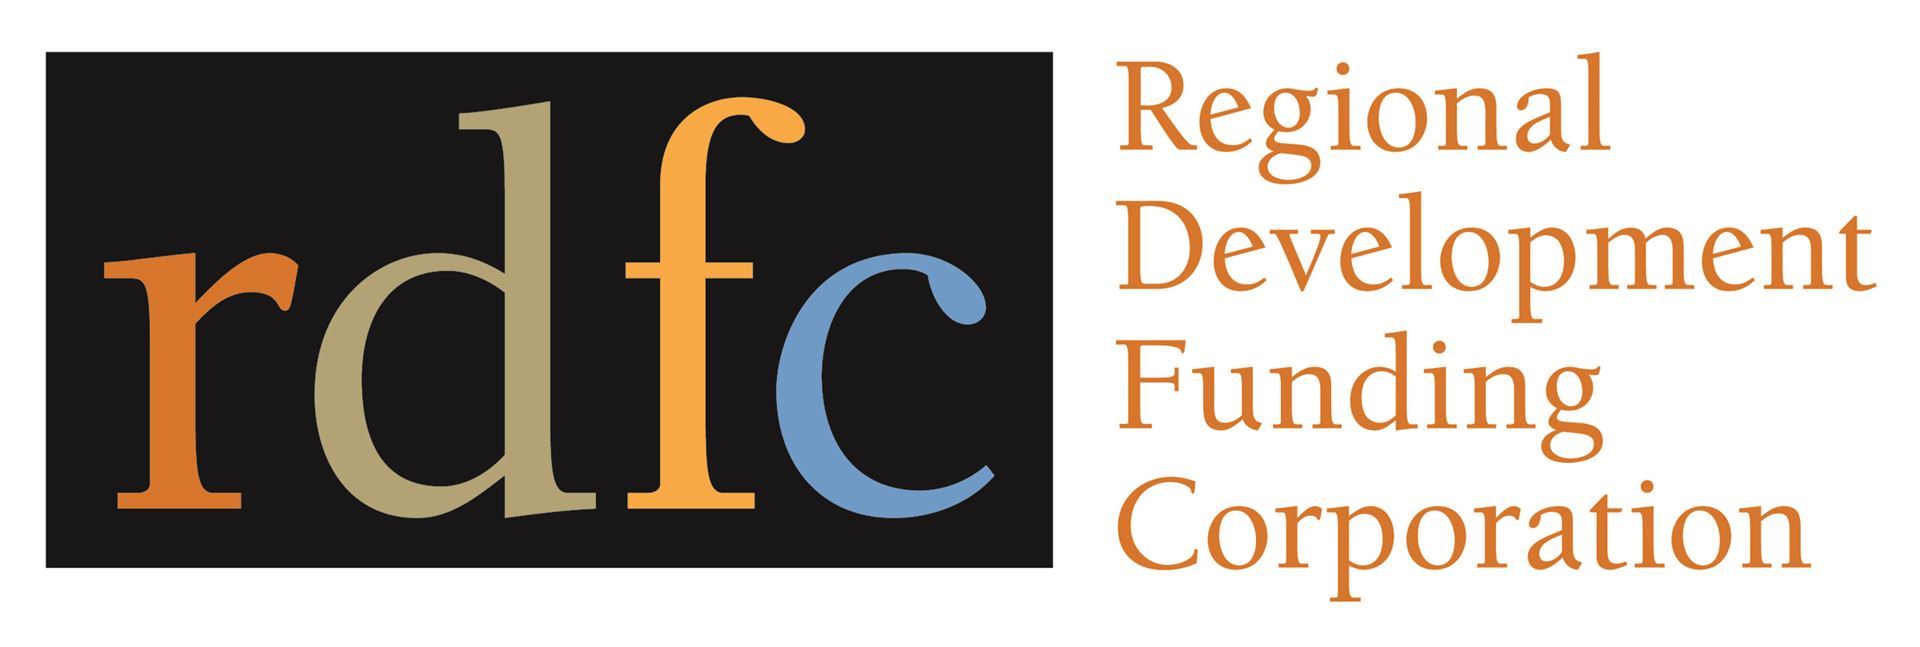 Regional Development Funding Corporation logo